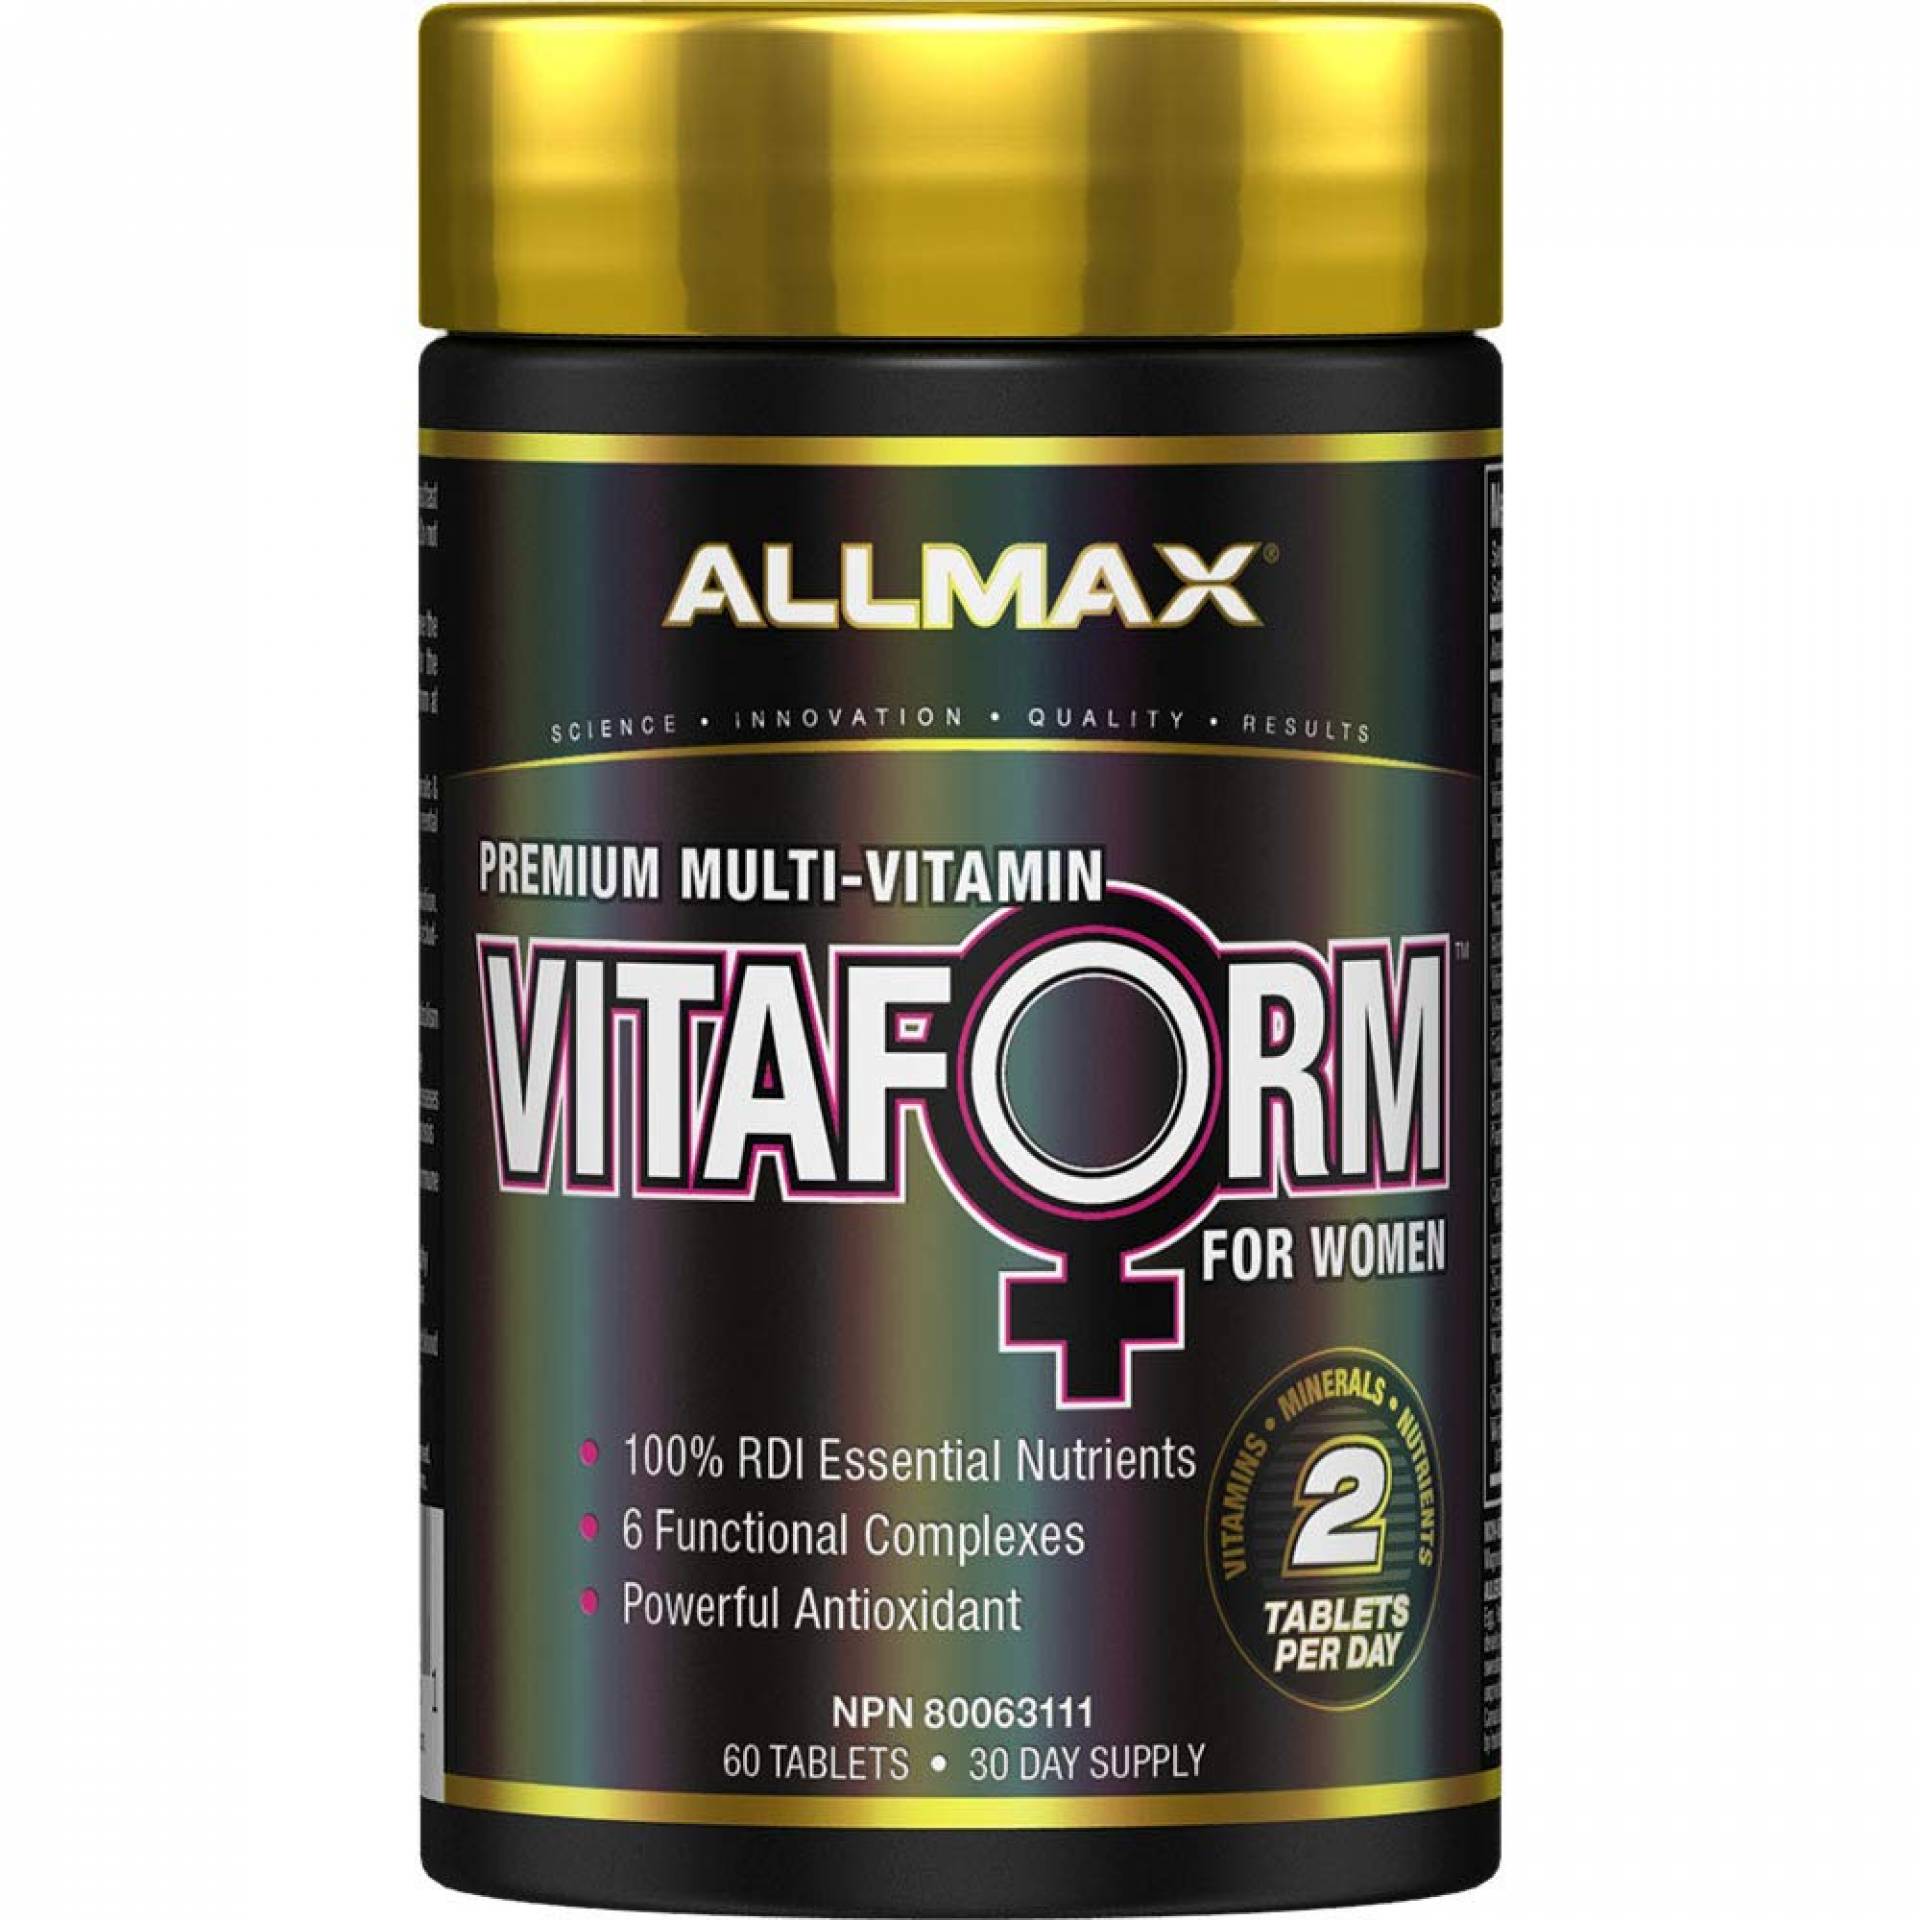 Allmax Vitaform HERS - $17.99